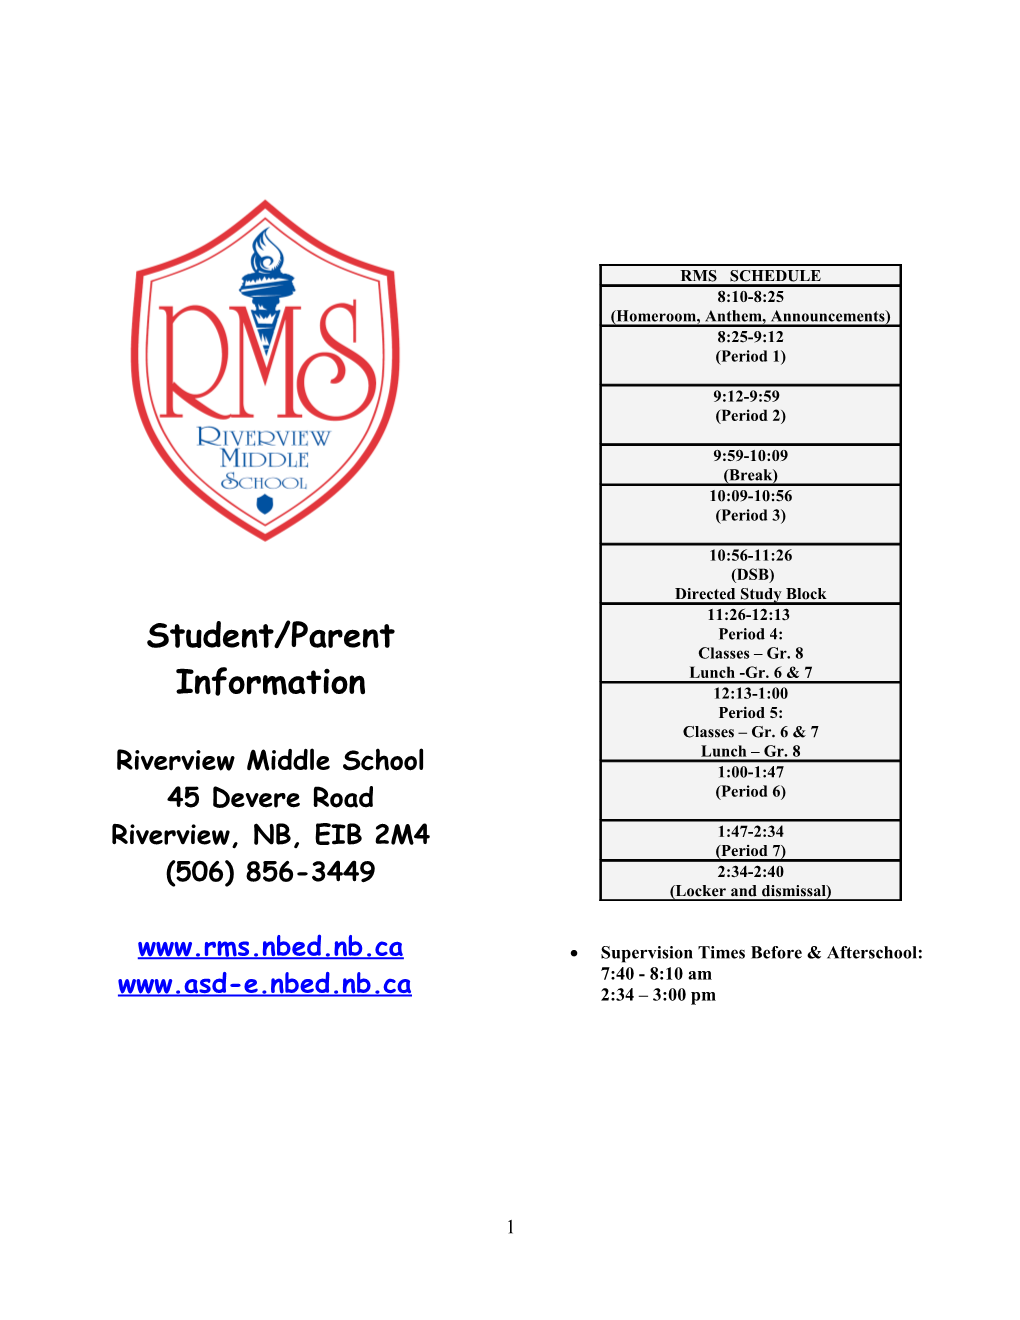 Student Parent Information